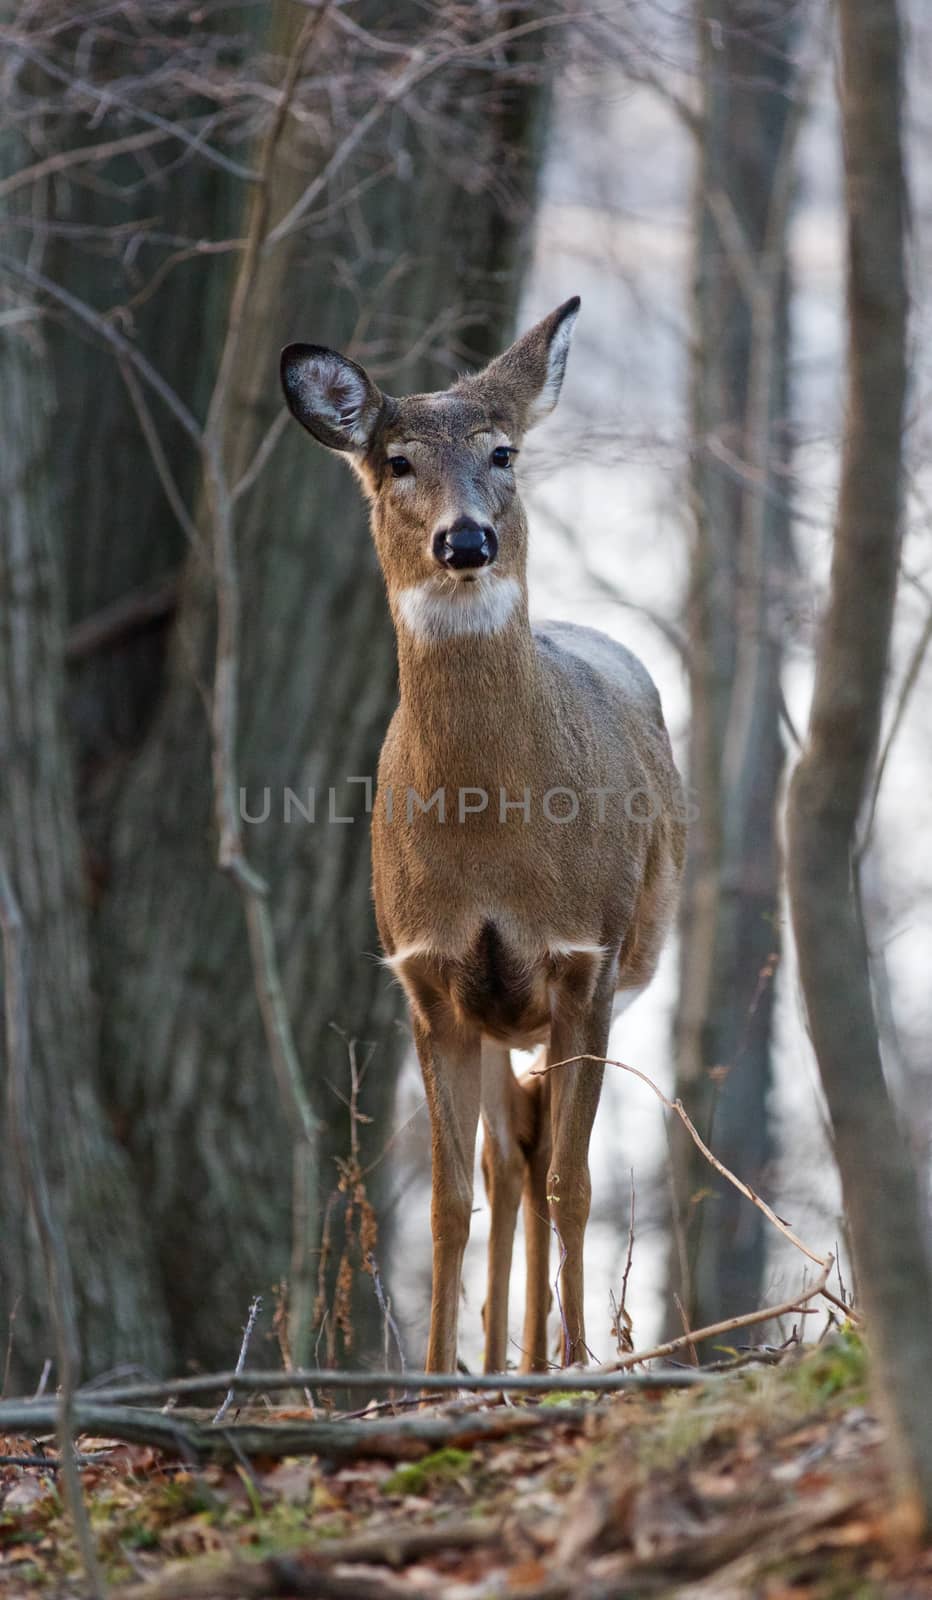 Cute young deer is looking at something